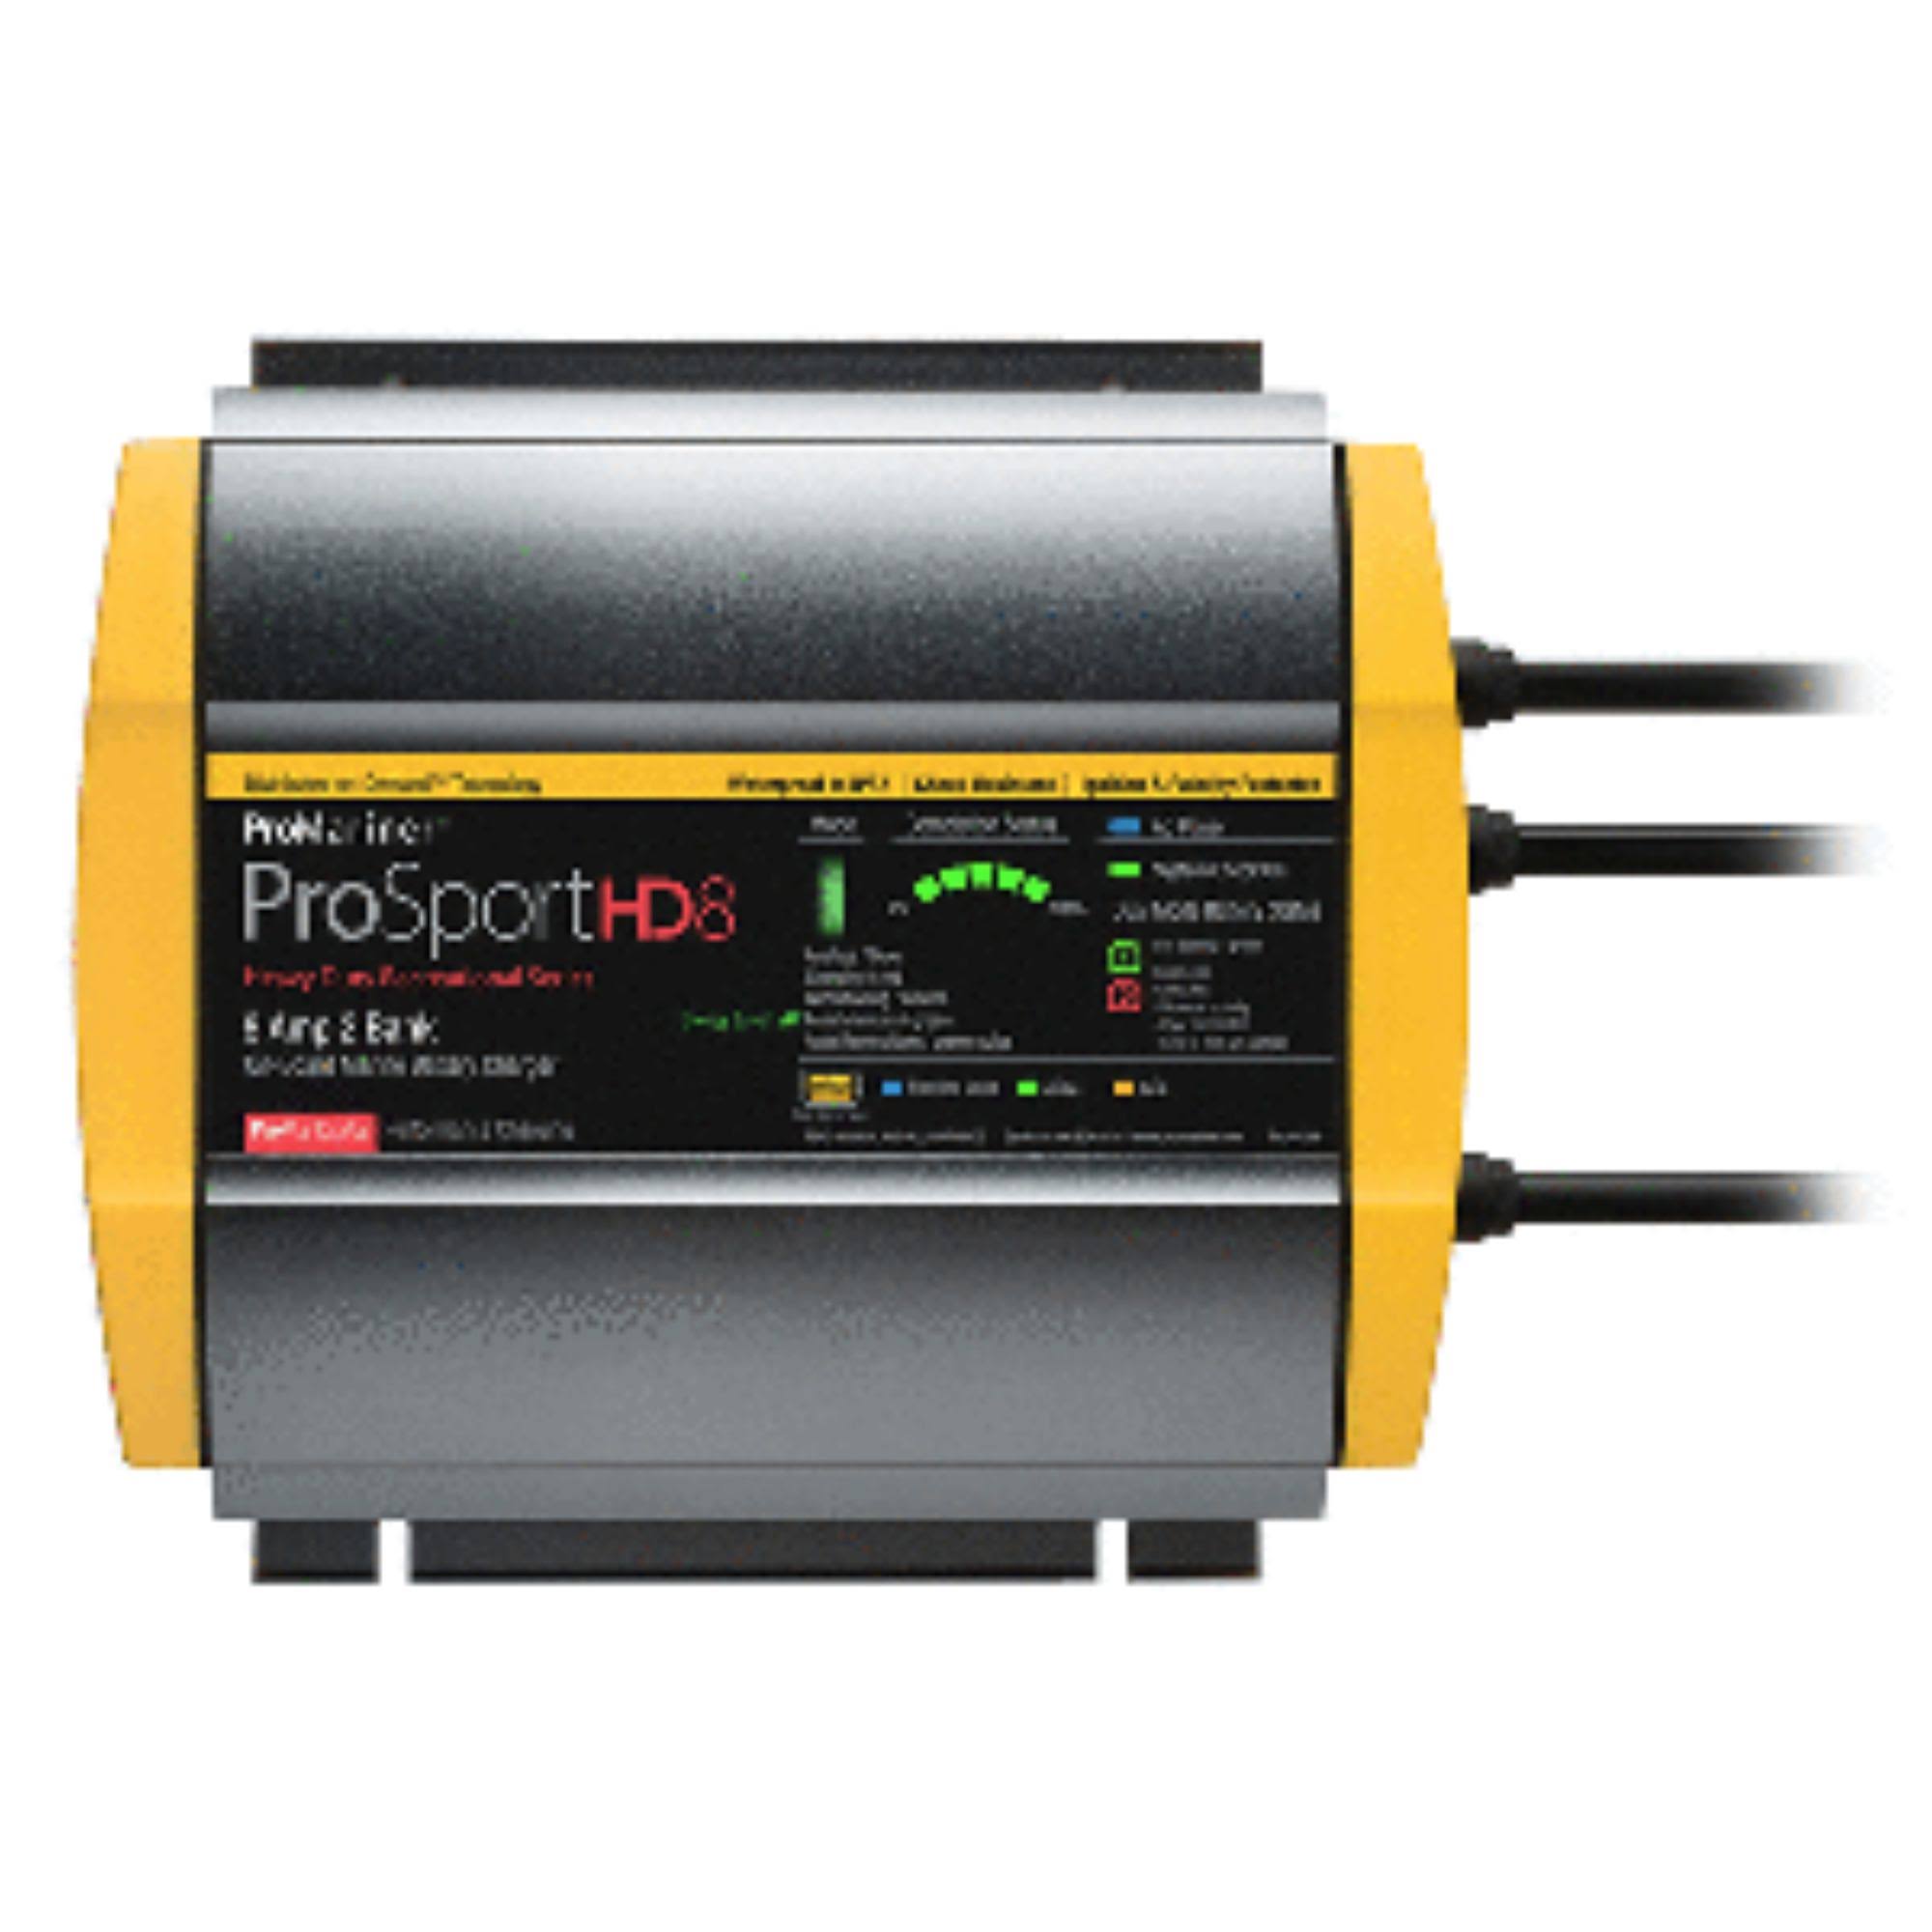 ProMariner - ProSportHD 8 Gen 4 - 8 Amp - 2 Bank Battery Charger